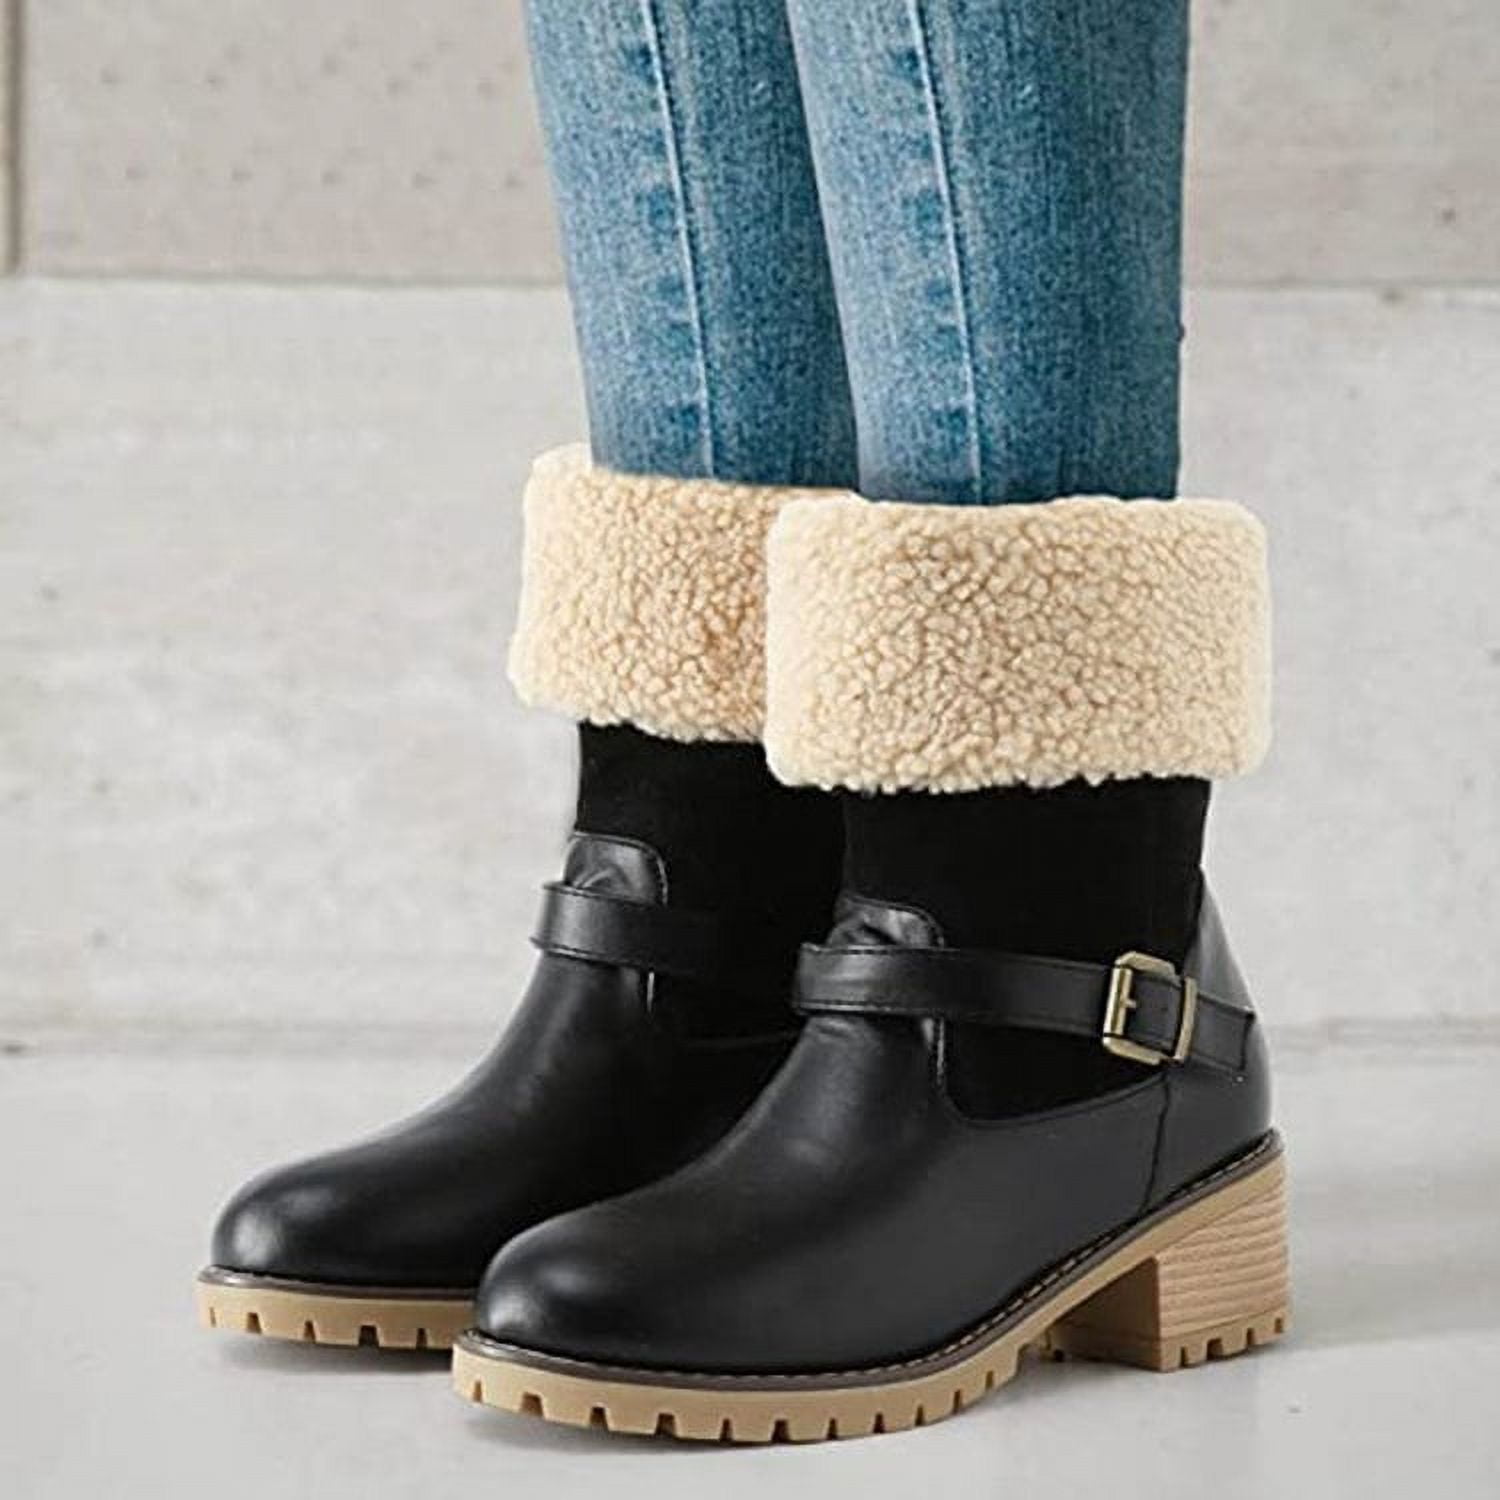 Women Winter Boots W/ Side Zipper Autumn High Heeled Ankle Booties | eBay